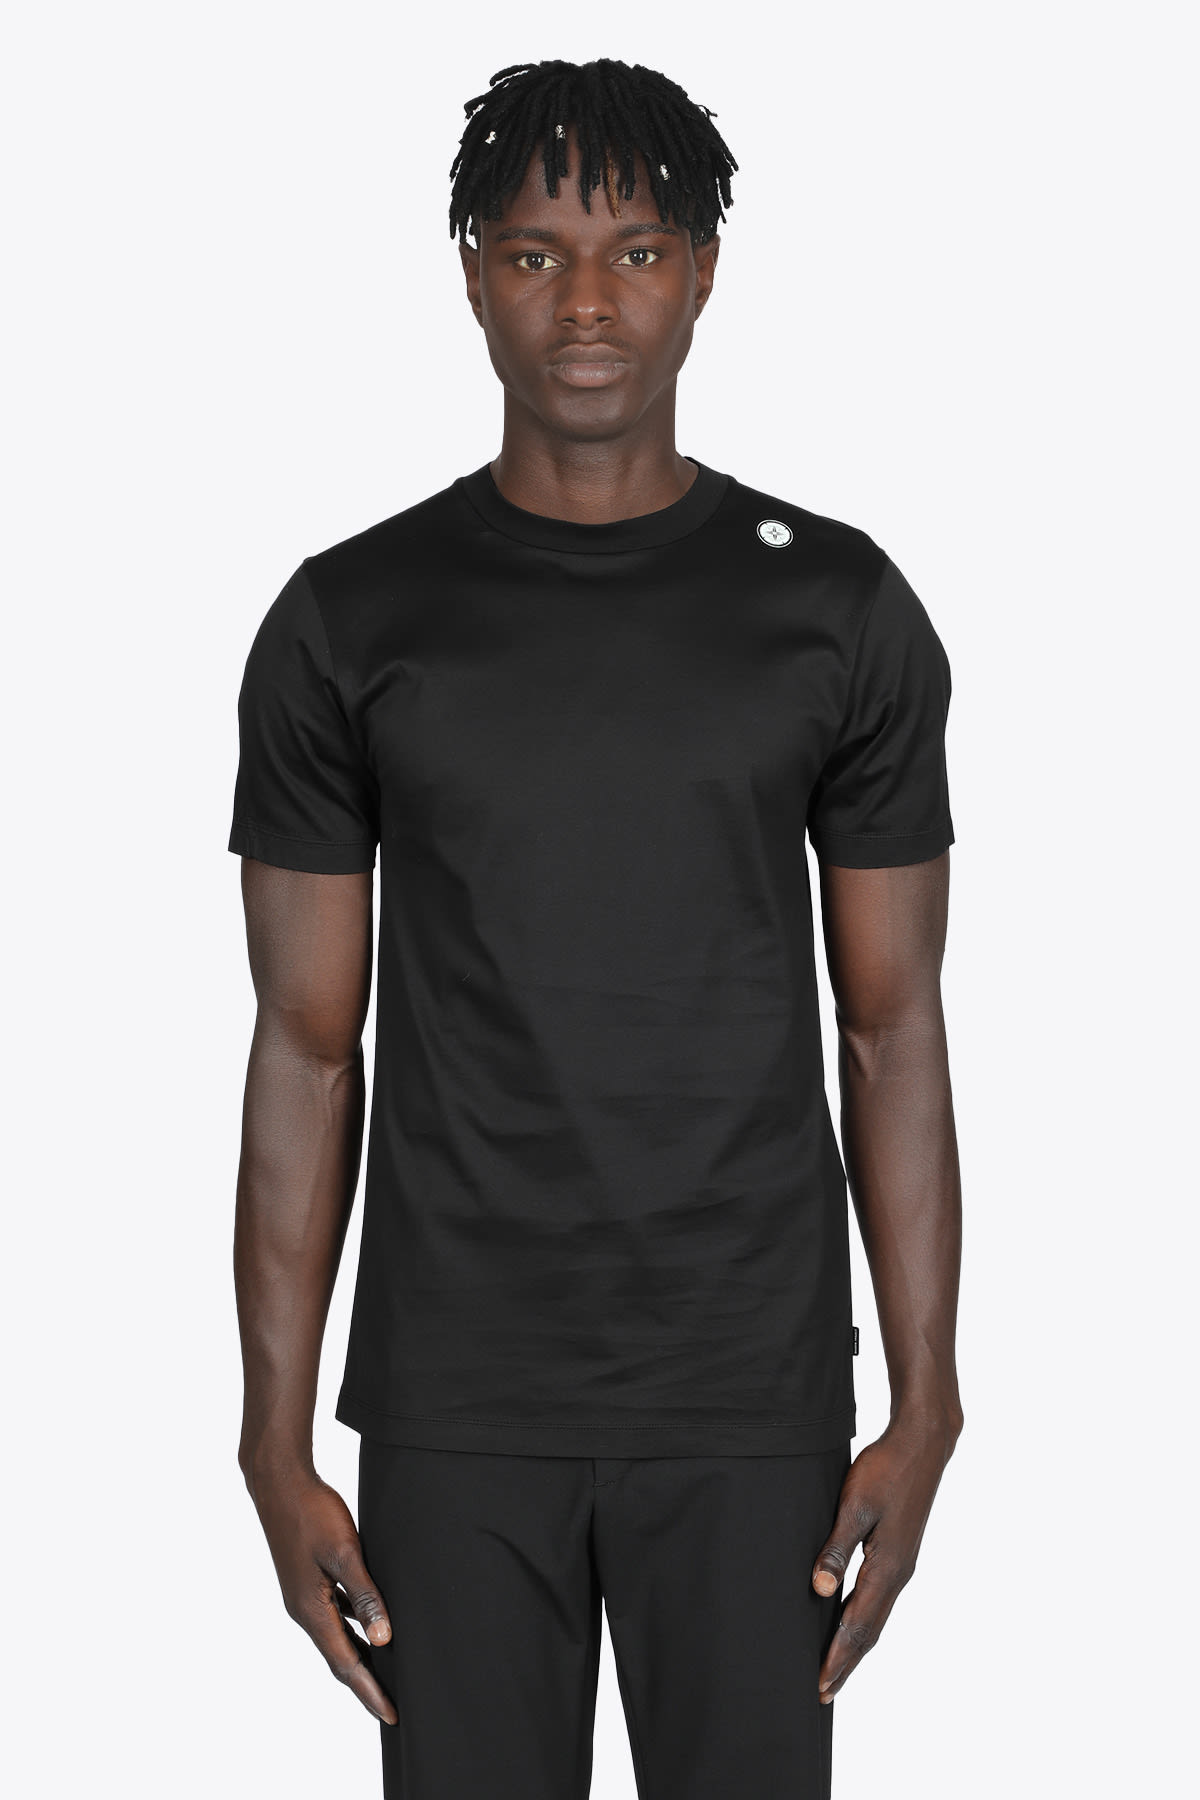 Stone Island Shadow Project Ss T-shirt Black mercerized cotton t-shirt with back logo